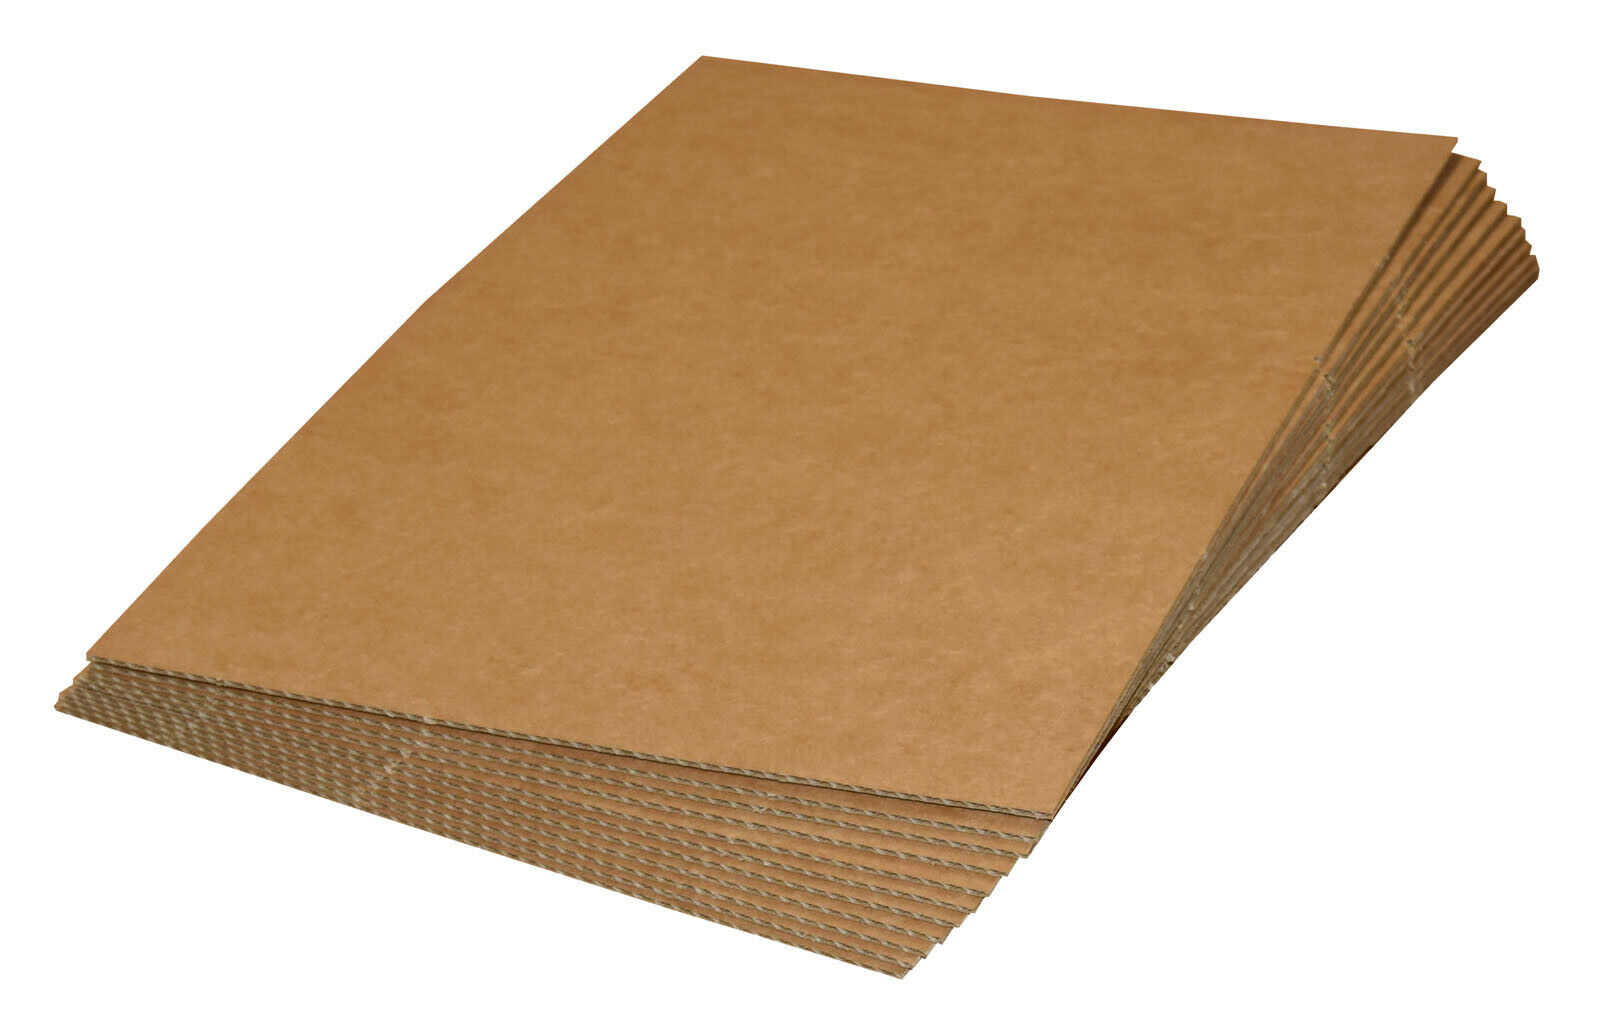 A5 A4 A3 A2 A1 A0 Brown Cardboard Corrugated Sheets Pads Divider Art Craft Board